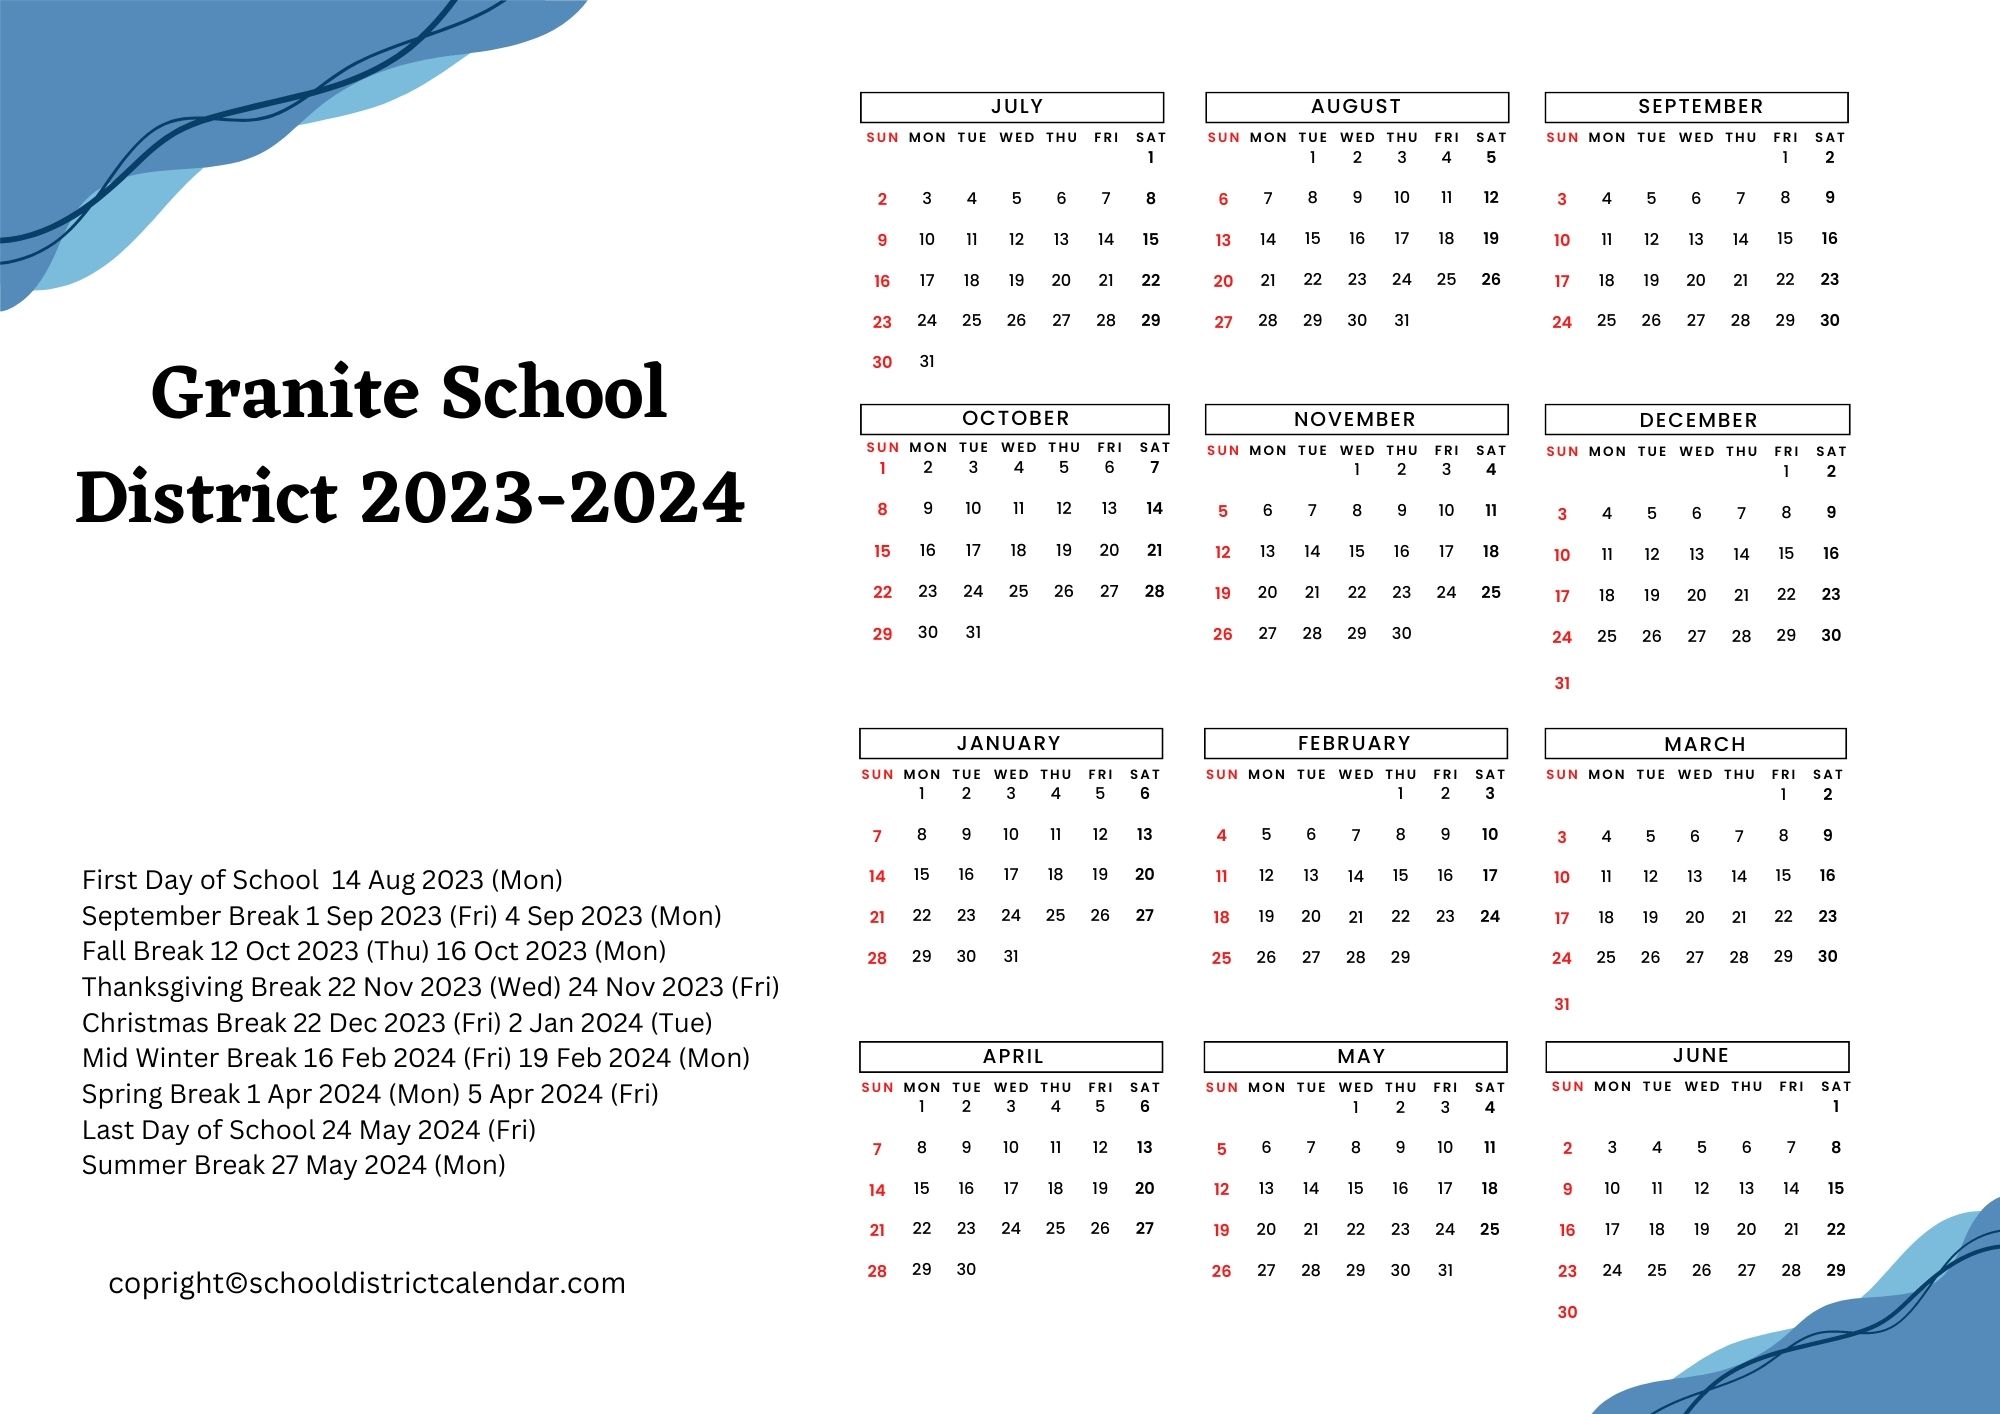 Granite School District Calendar Holidays 20232024